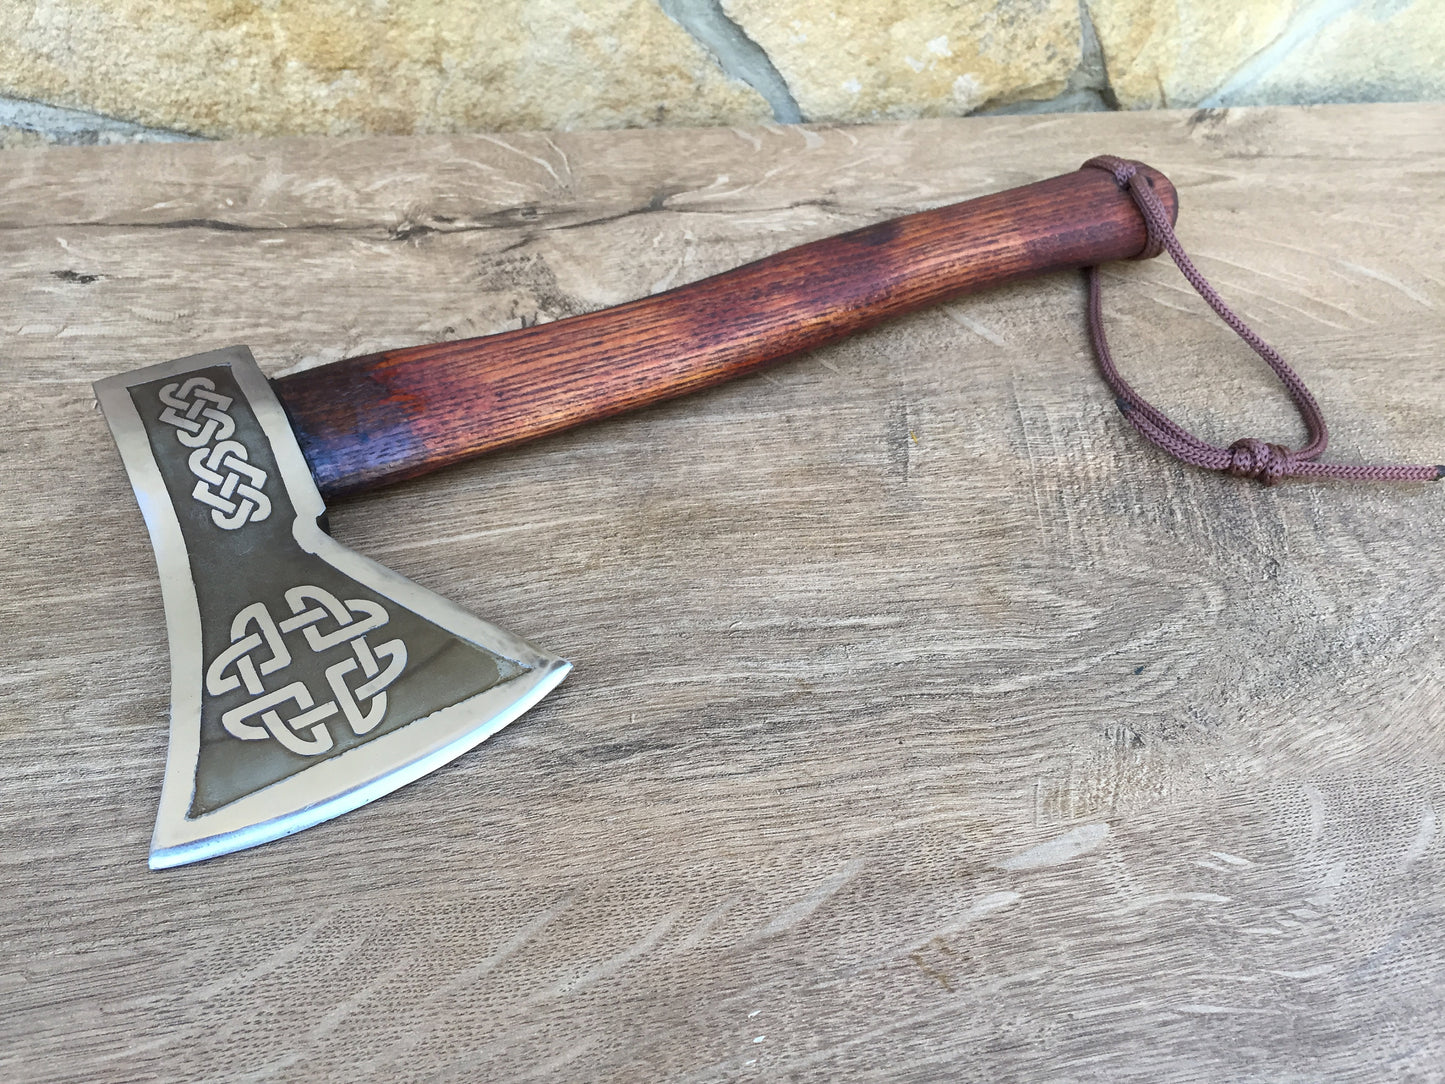 Viking axe, mens gifts, medieval axe, tomahawk, hatchet, barbarian axe, forged tool, decorative axe, vining bearded axe,carving axe,cool axe